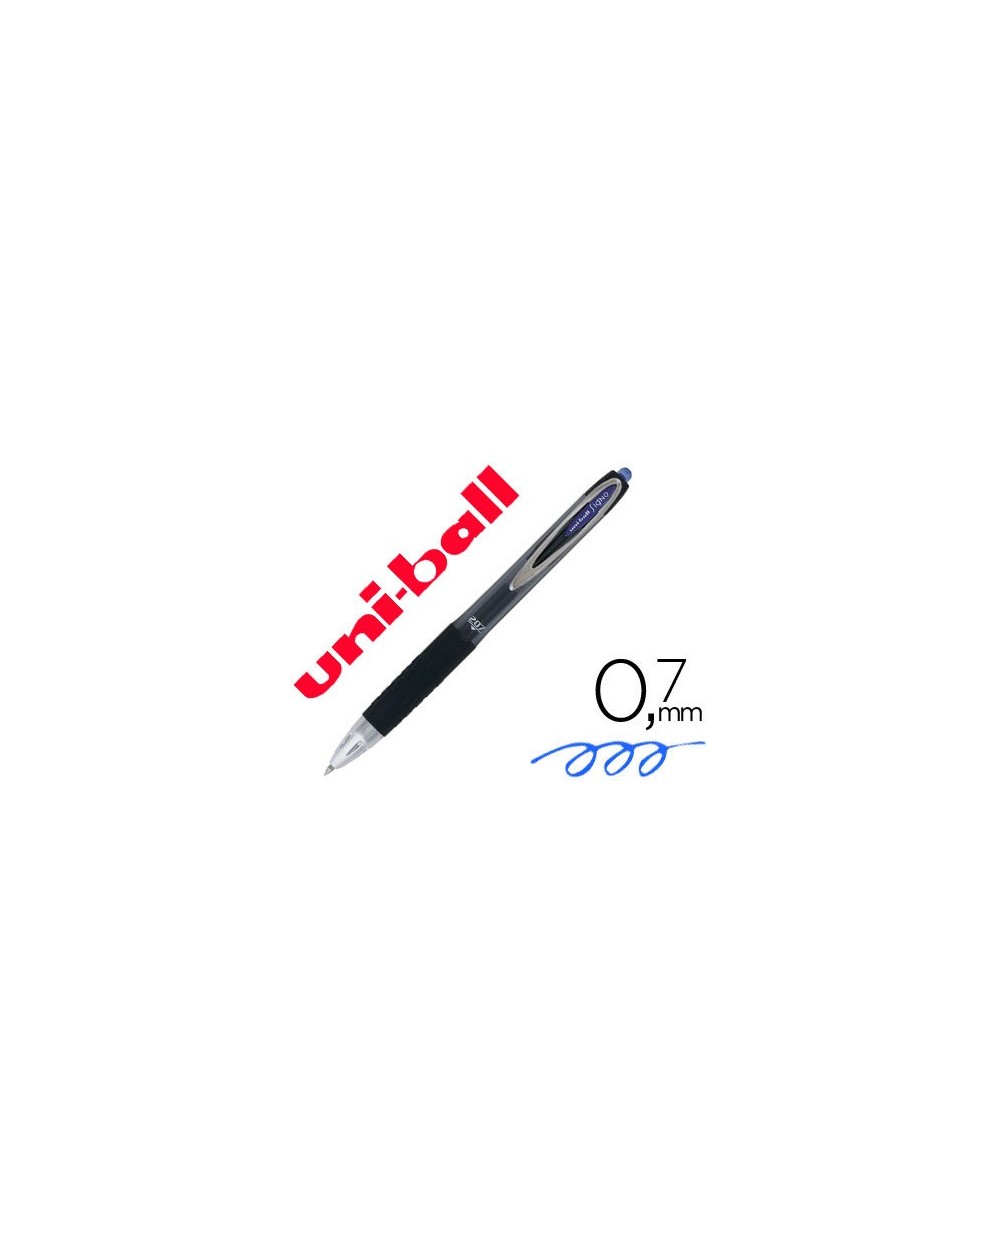 Boligrafo uni ball roller umn 207 retractil 07 mm color azul